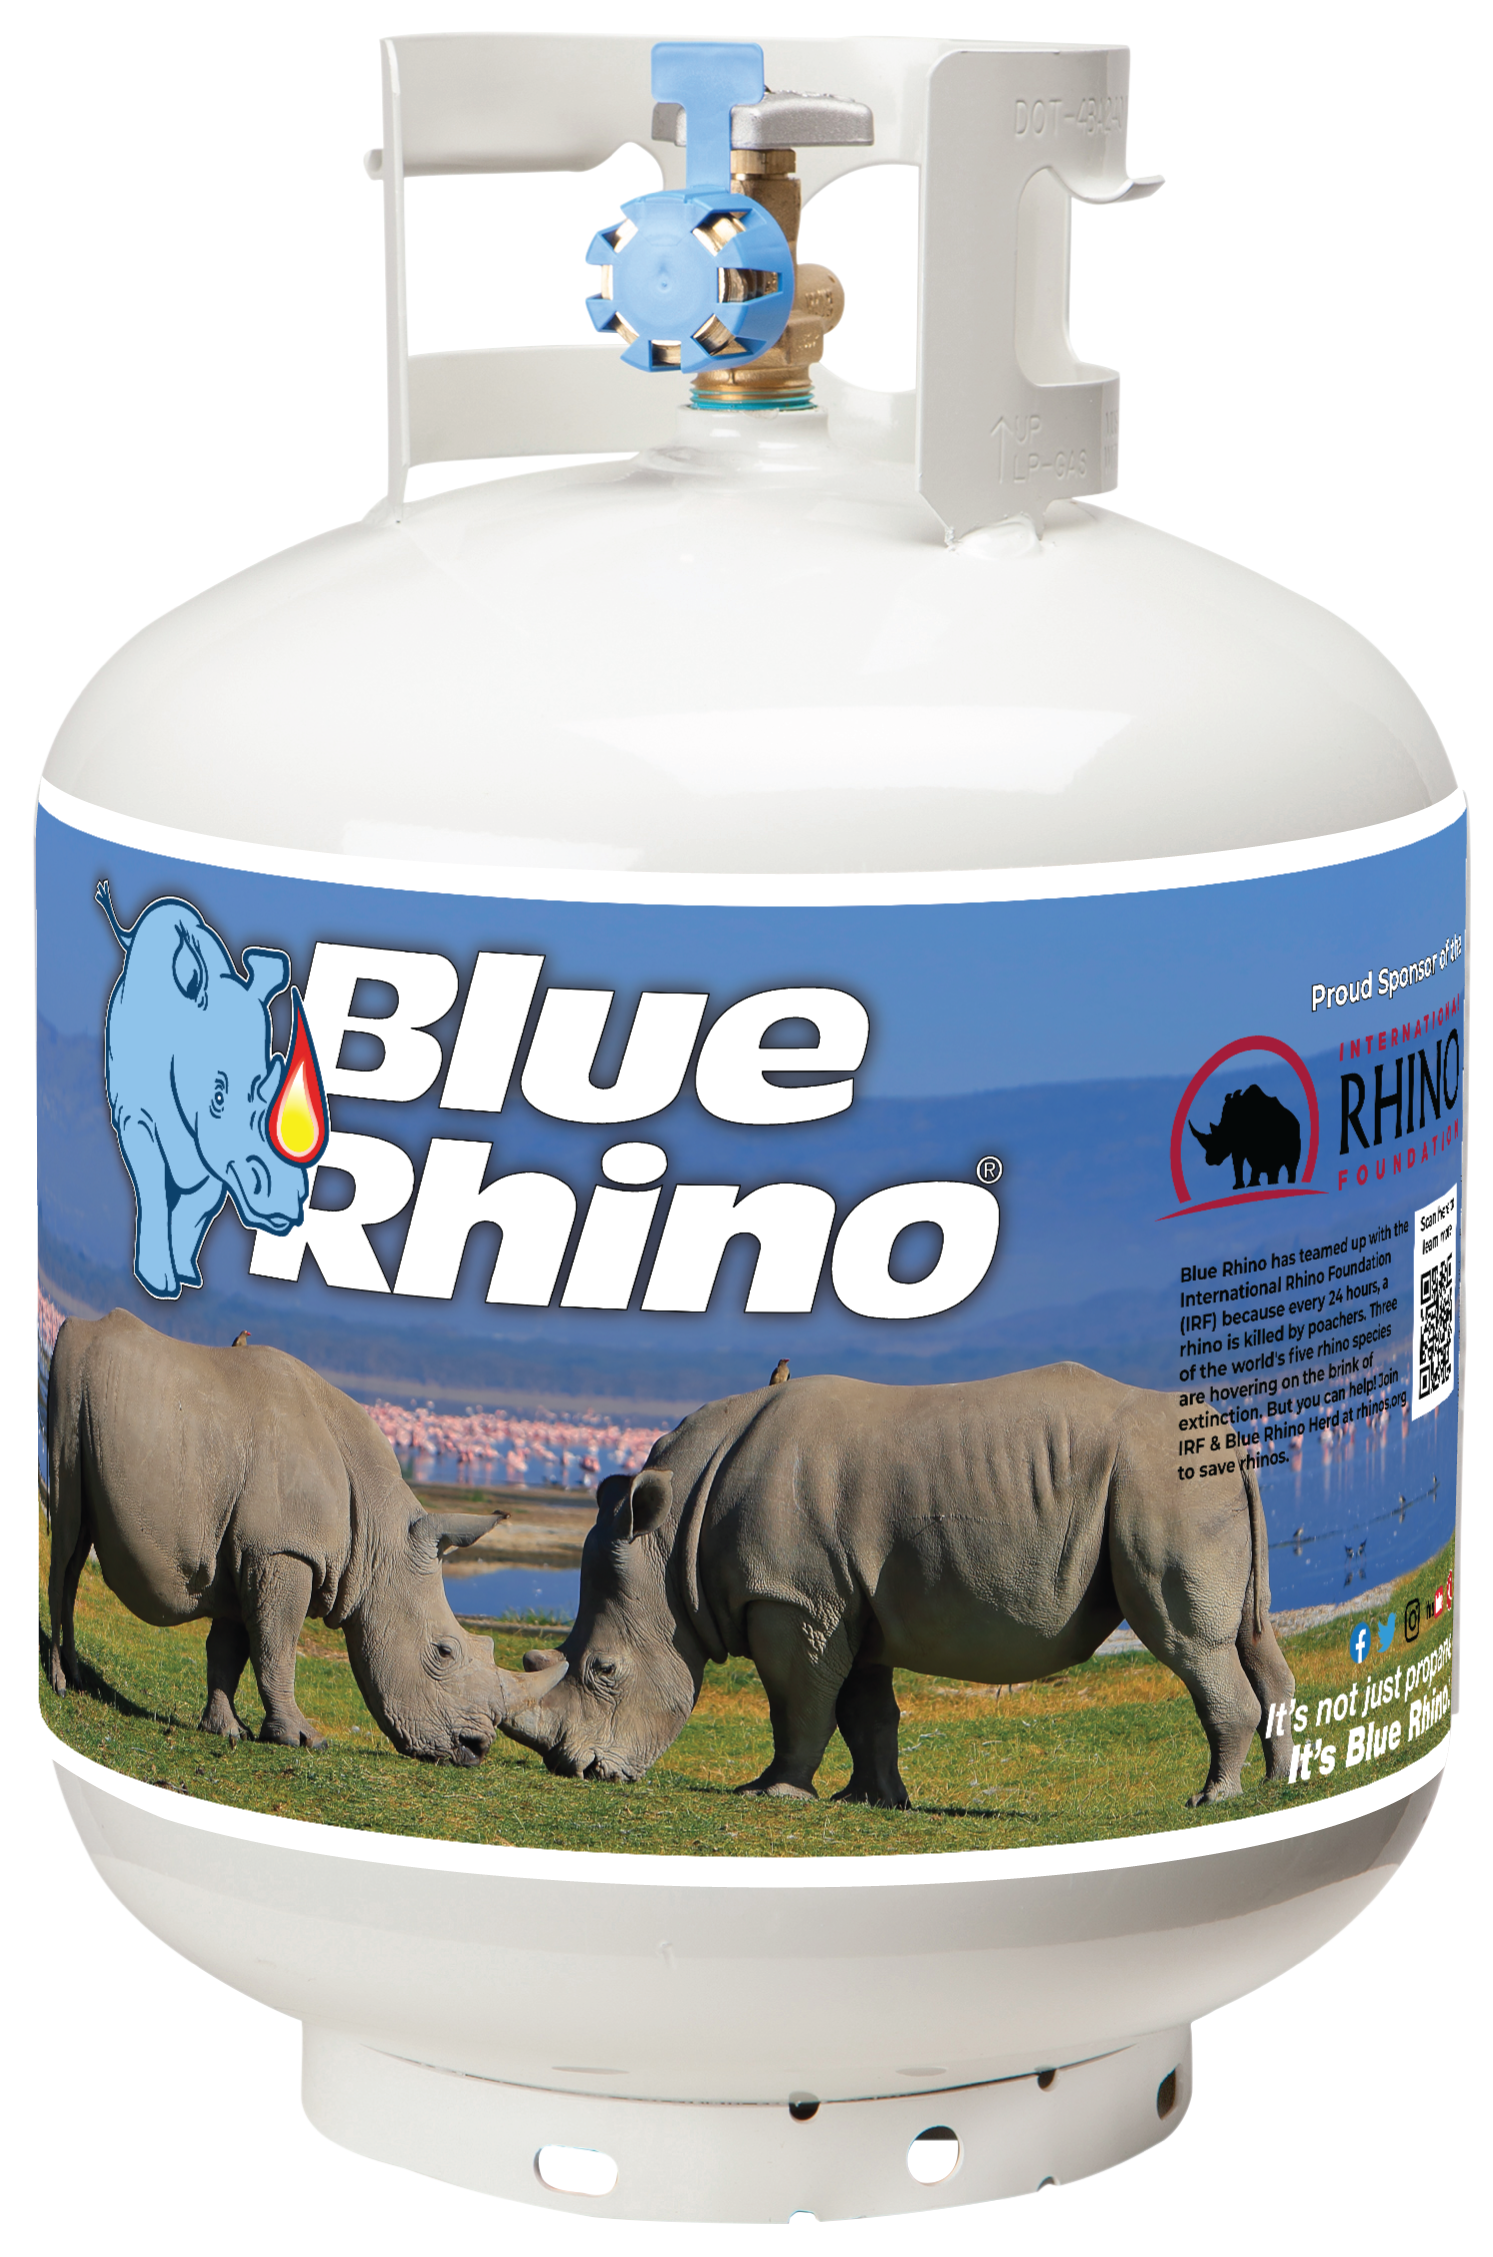 IRF Themed Tank Sleeve Created by Blue Rhino